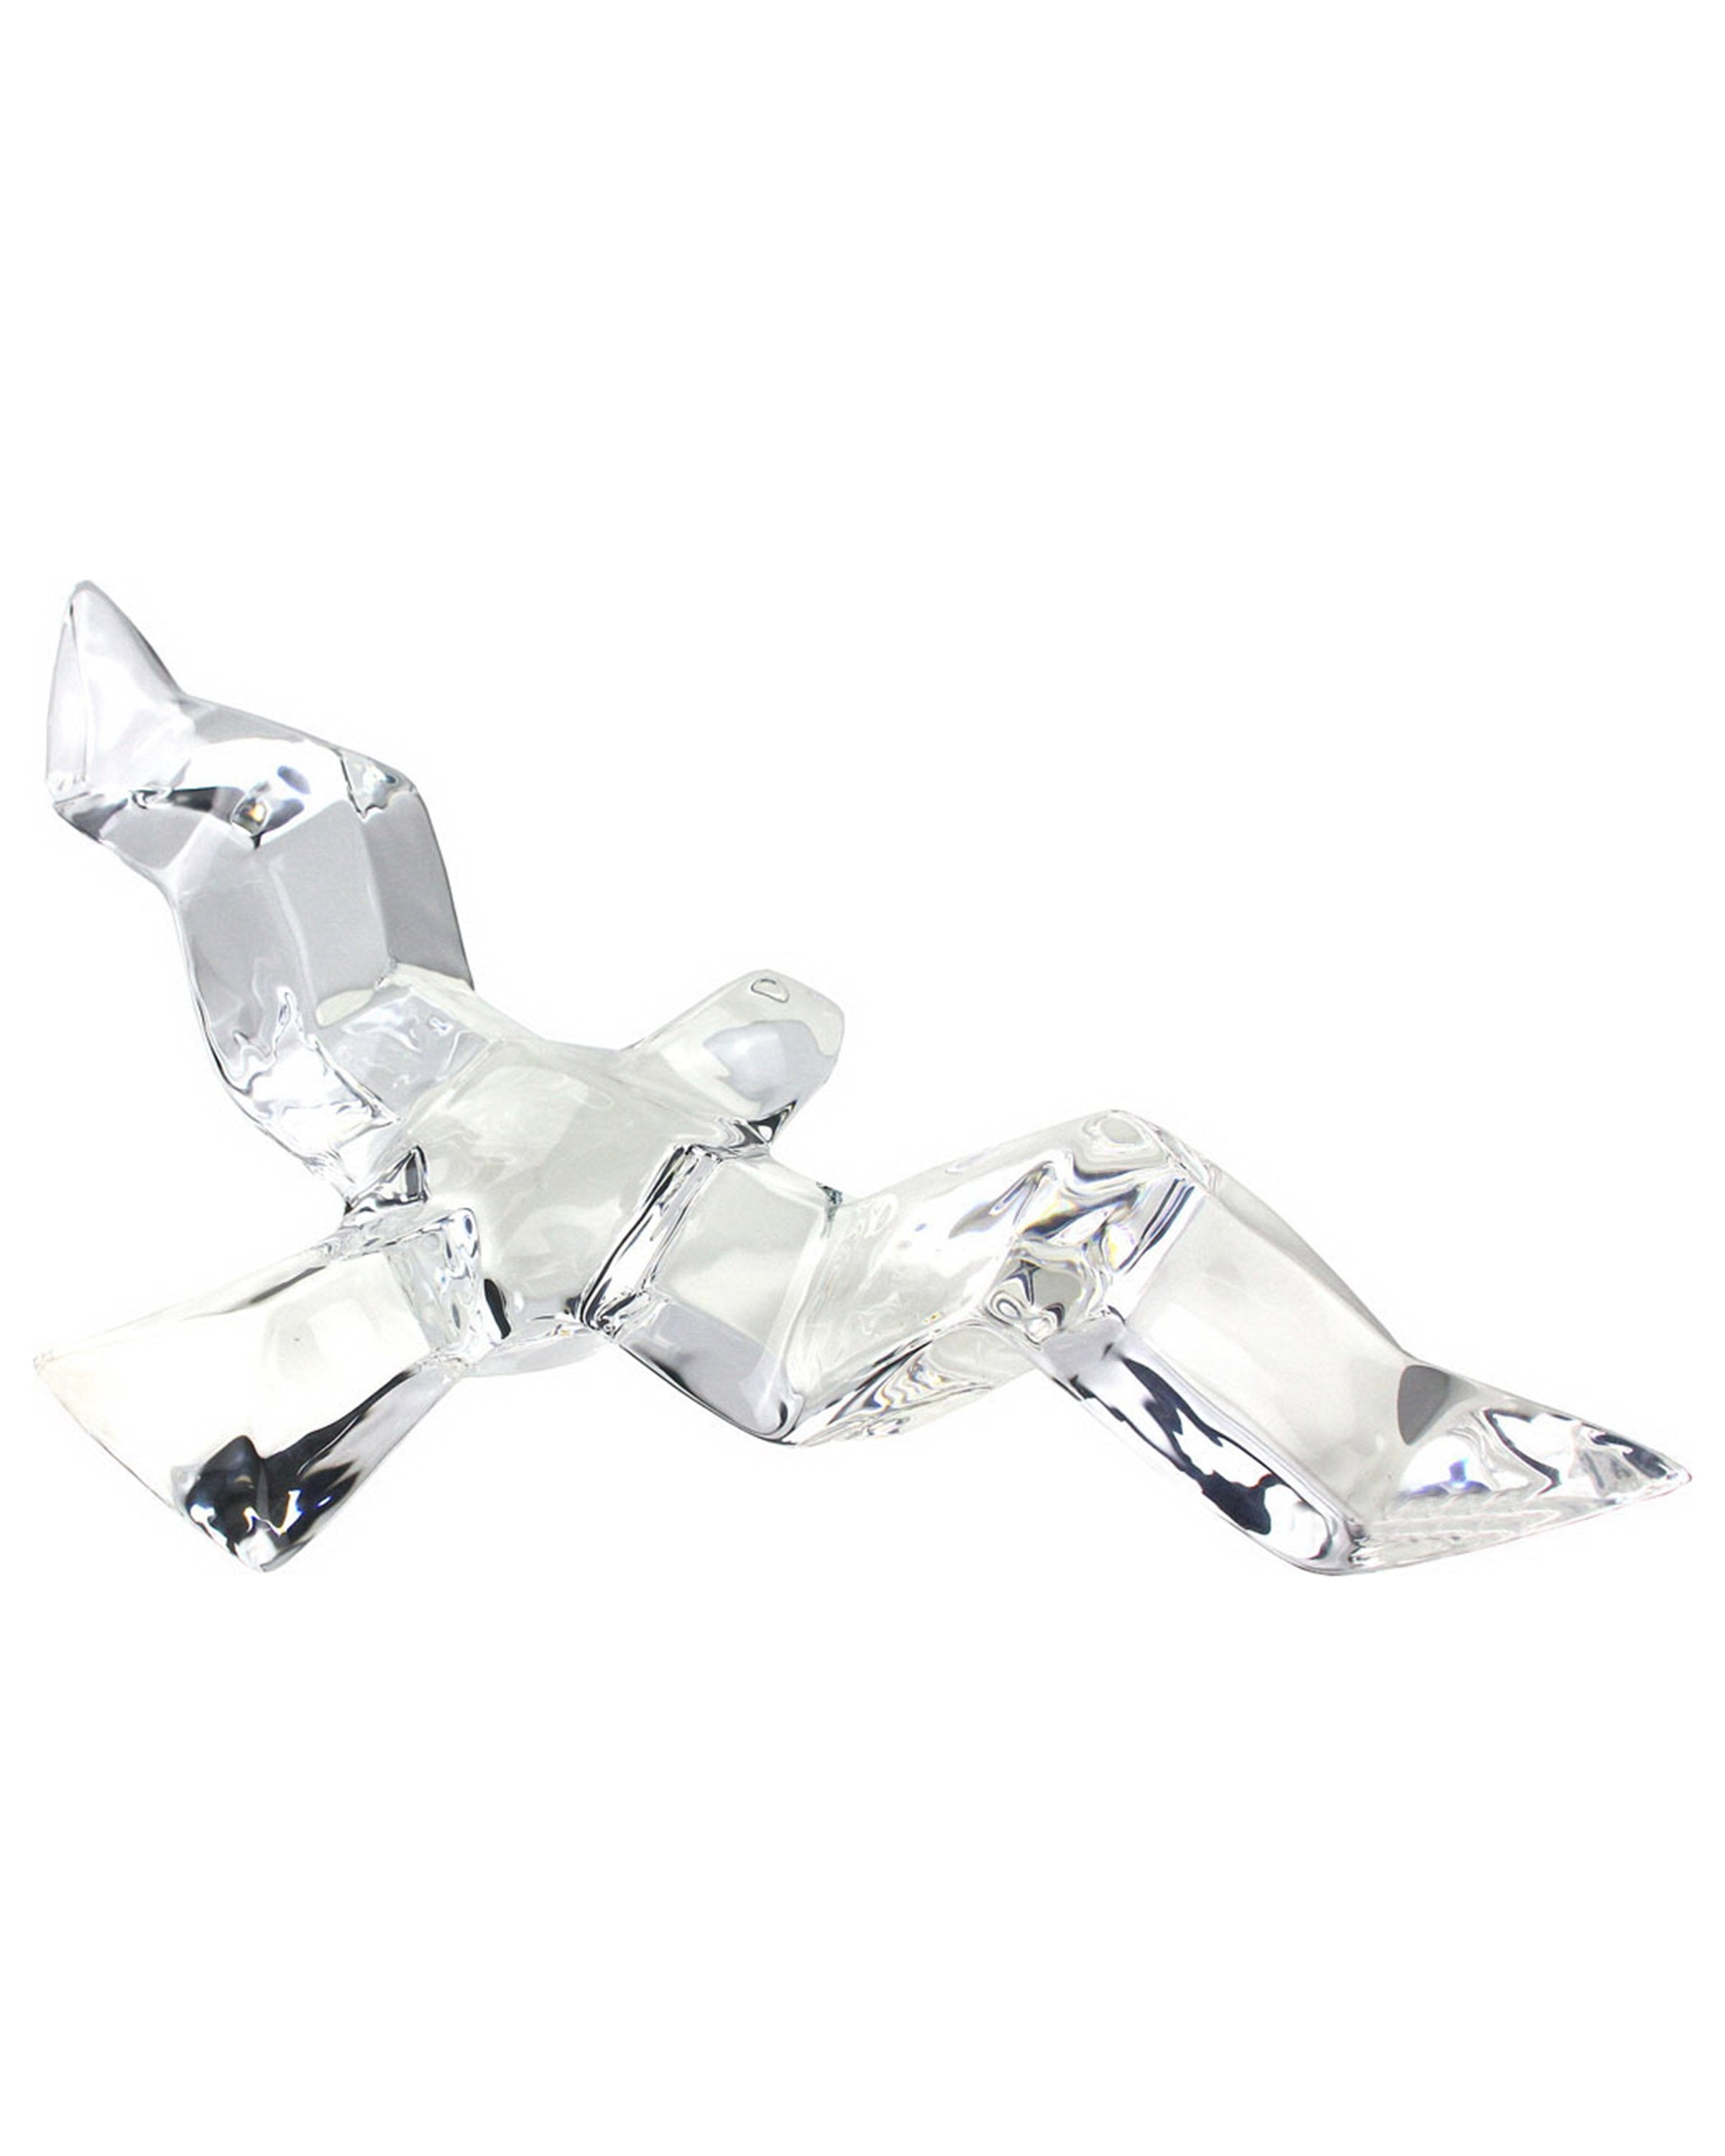 Beautiful High-Quality Fiber Dylan Crystal Sculpture